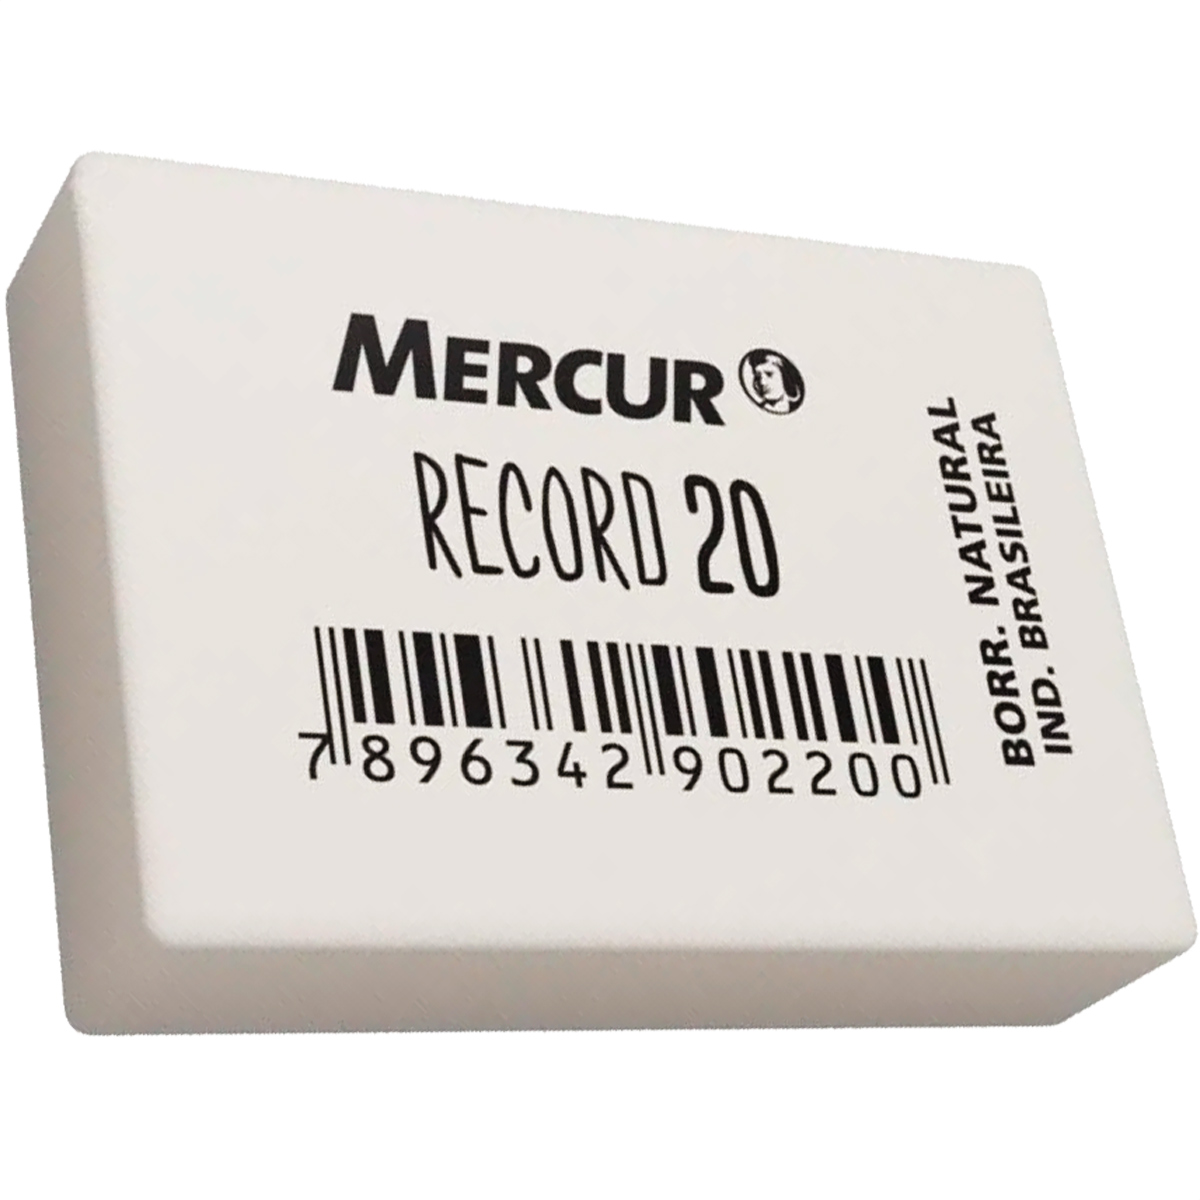 Borracha Mercur Record 20 Media 5 cm Natural Brasileira